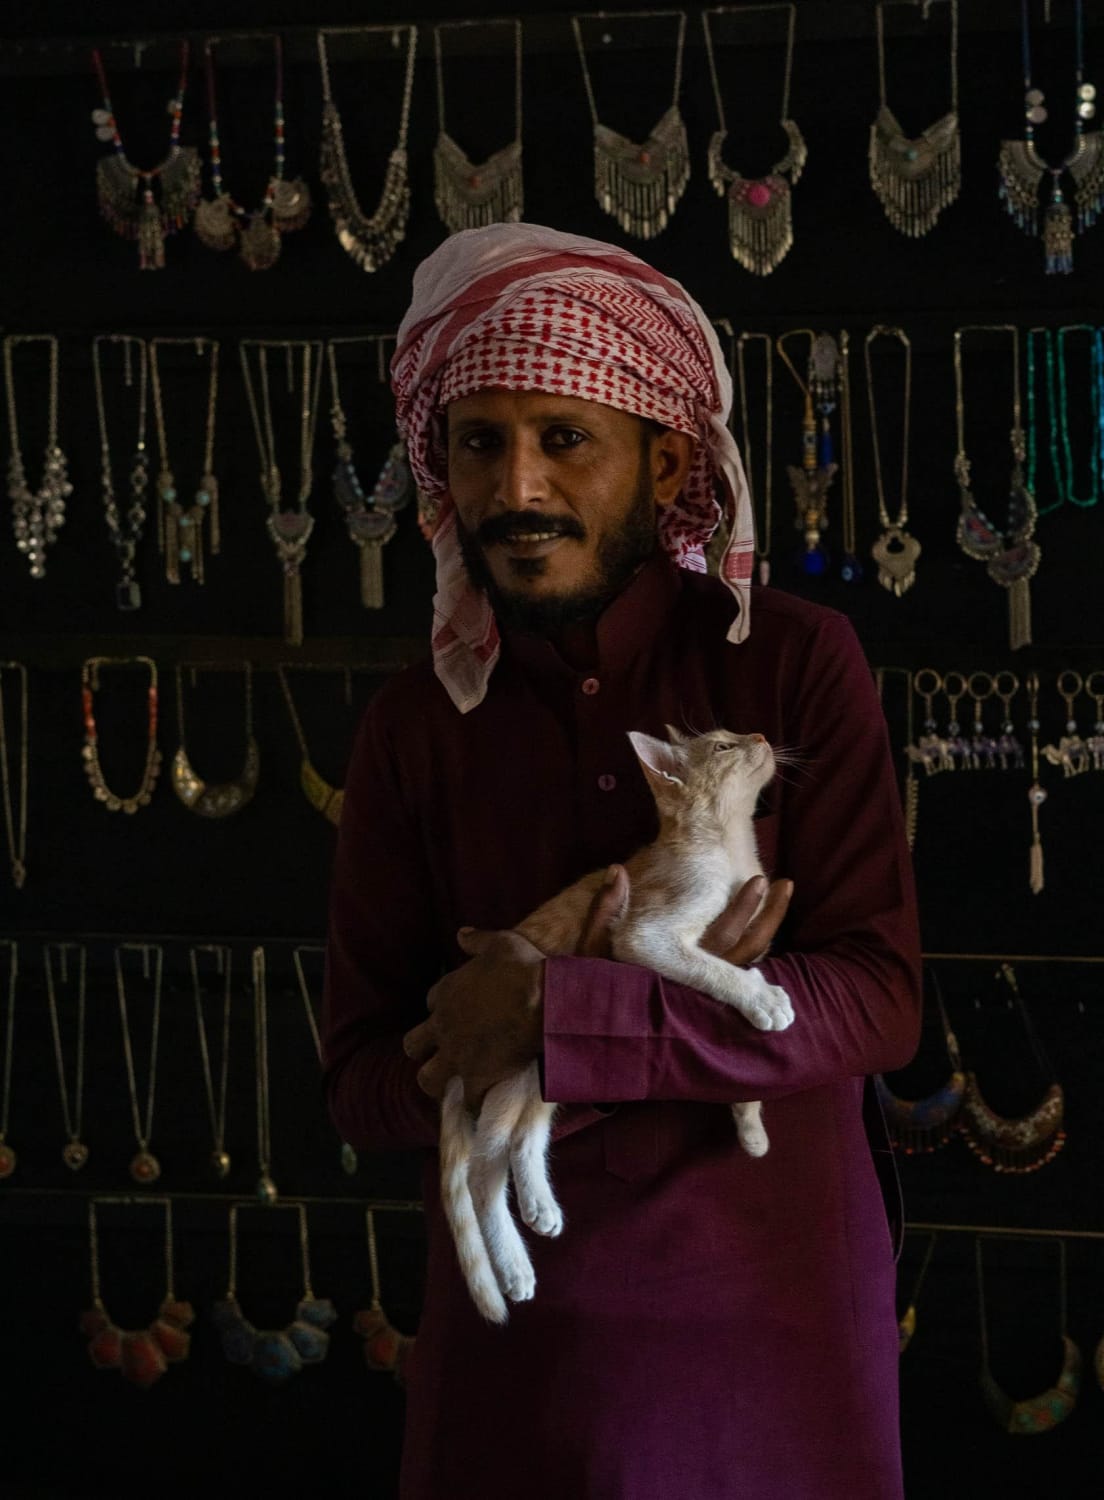 ITAP of a Jordanian street vendor